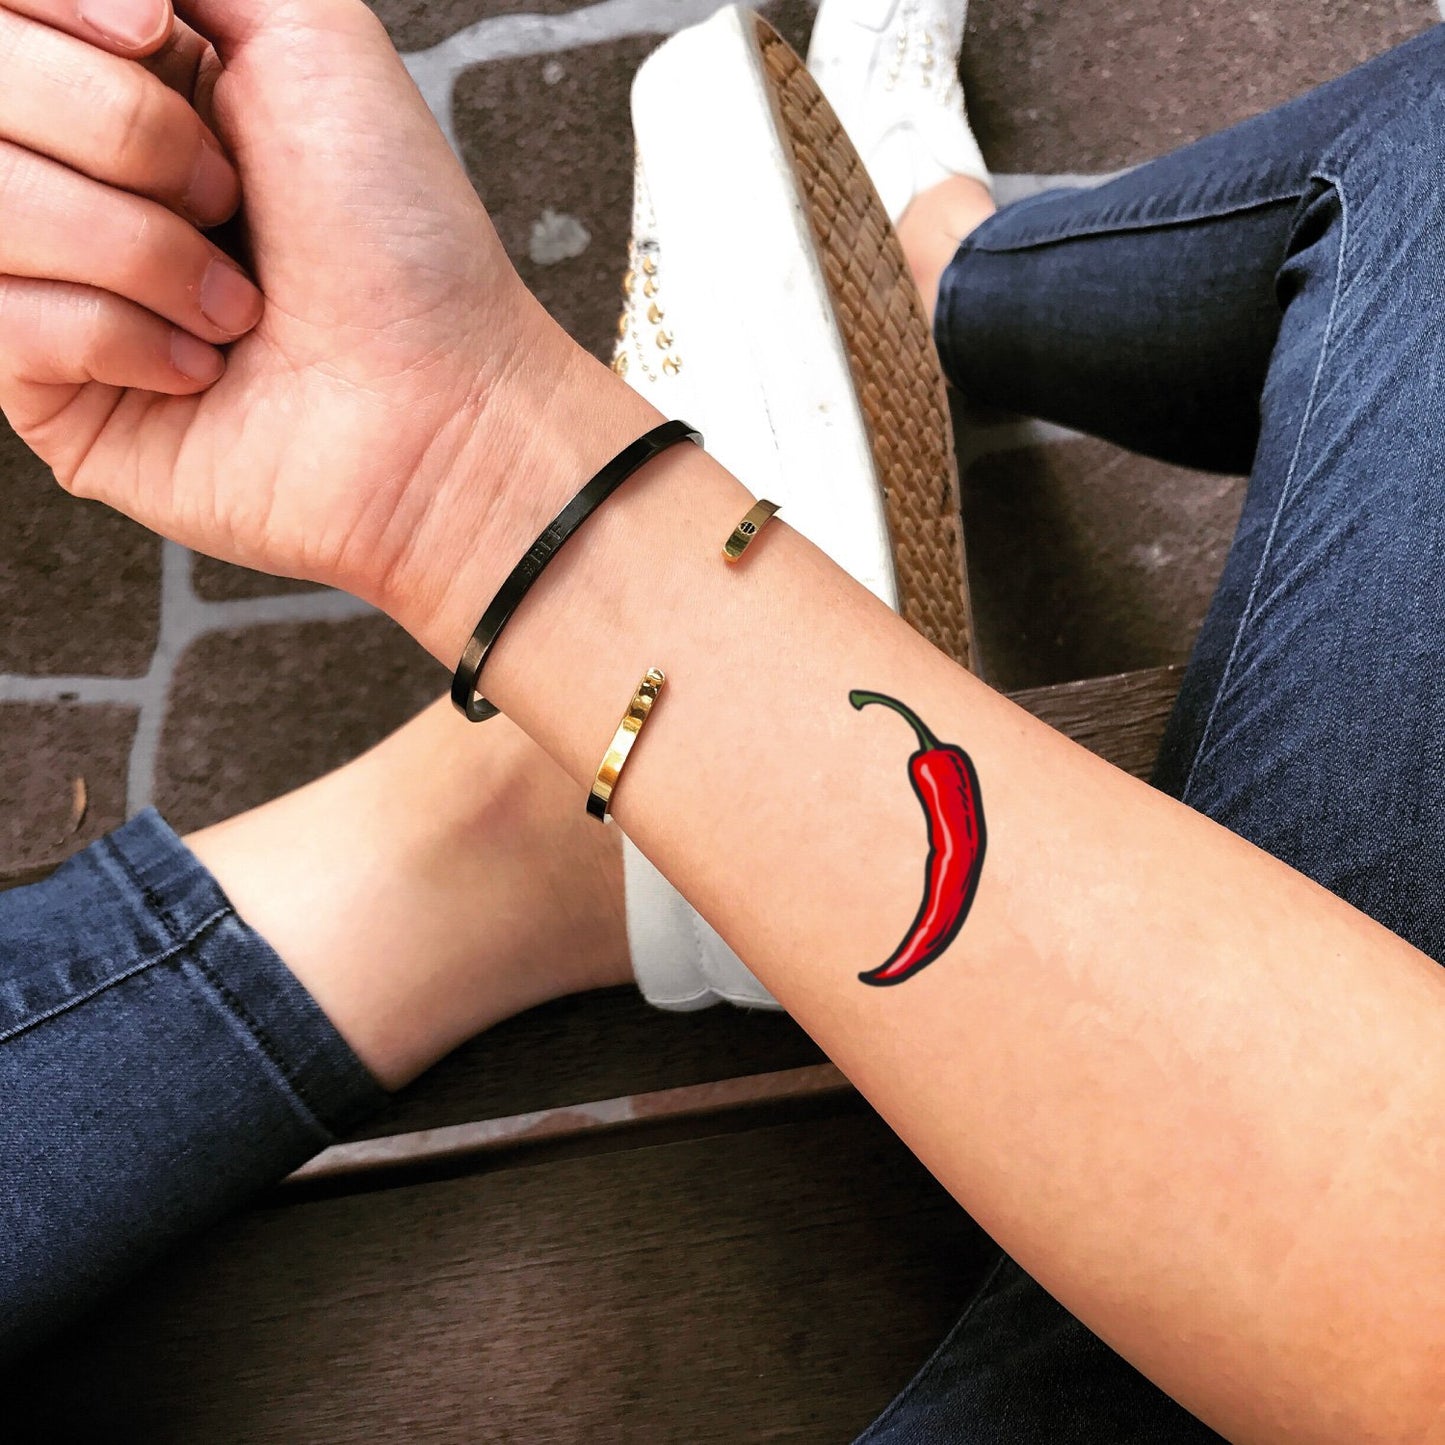 fake small chili pepper food color temporary tattoo sticker design idea on forearm